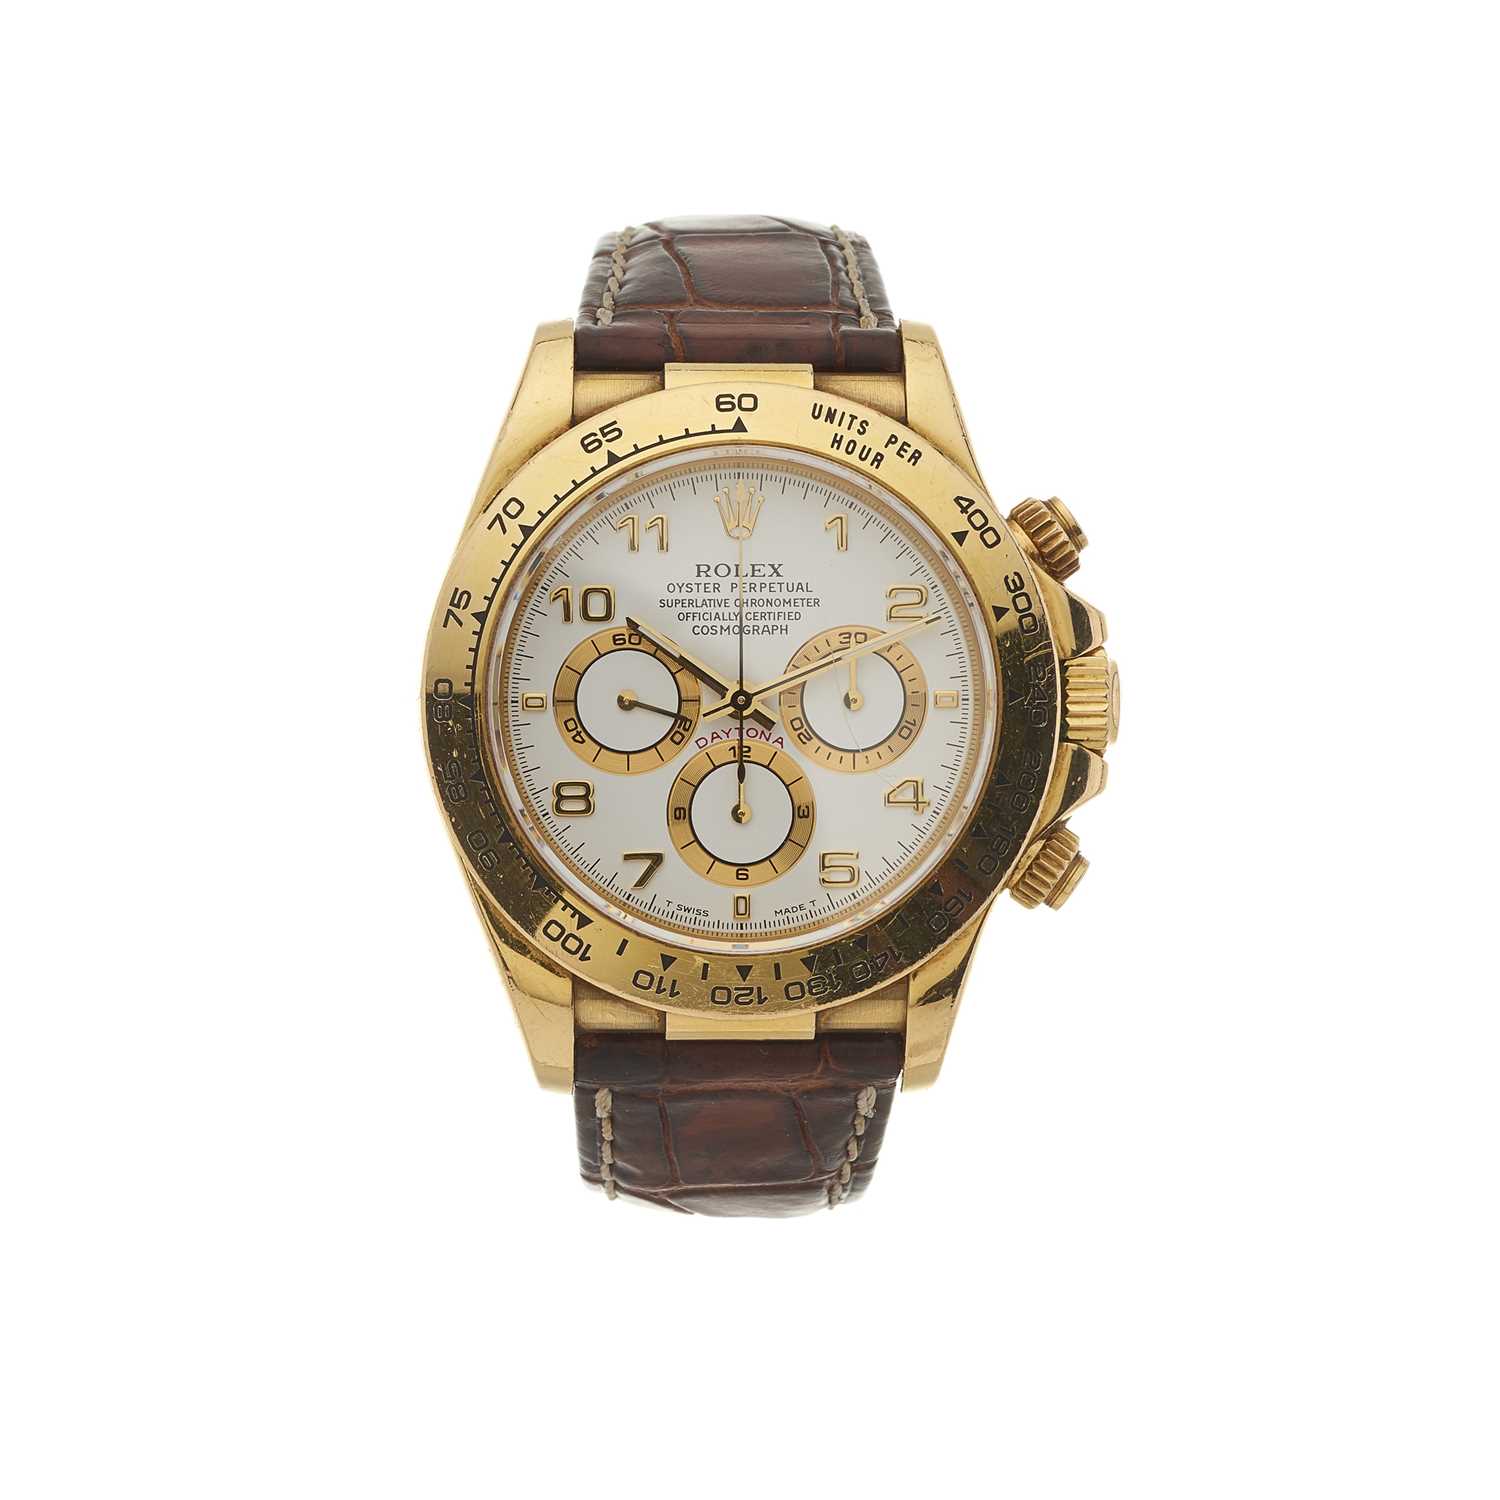 220 - Rolex, an Oyster Perpetual Cosmograph Daytona chronograph wrist watch